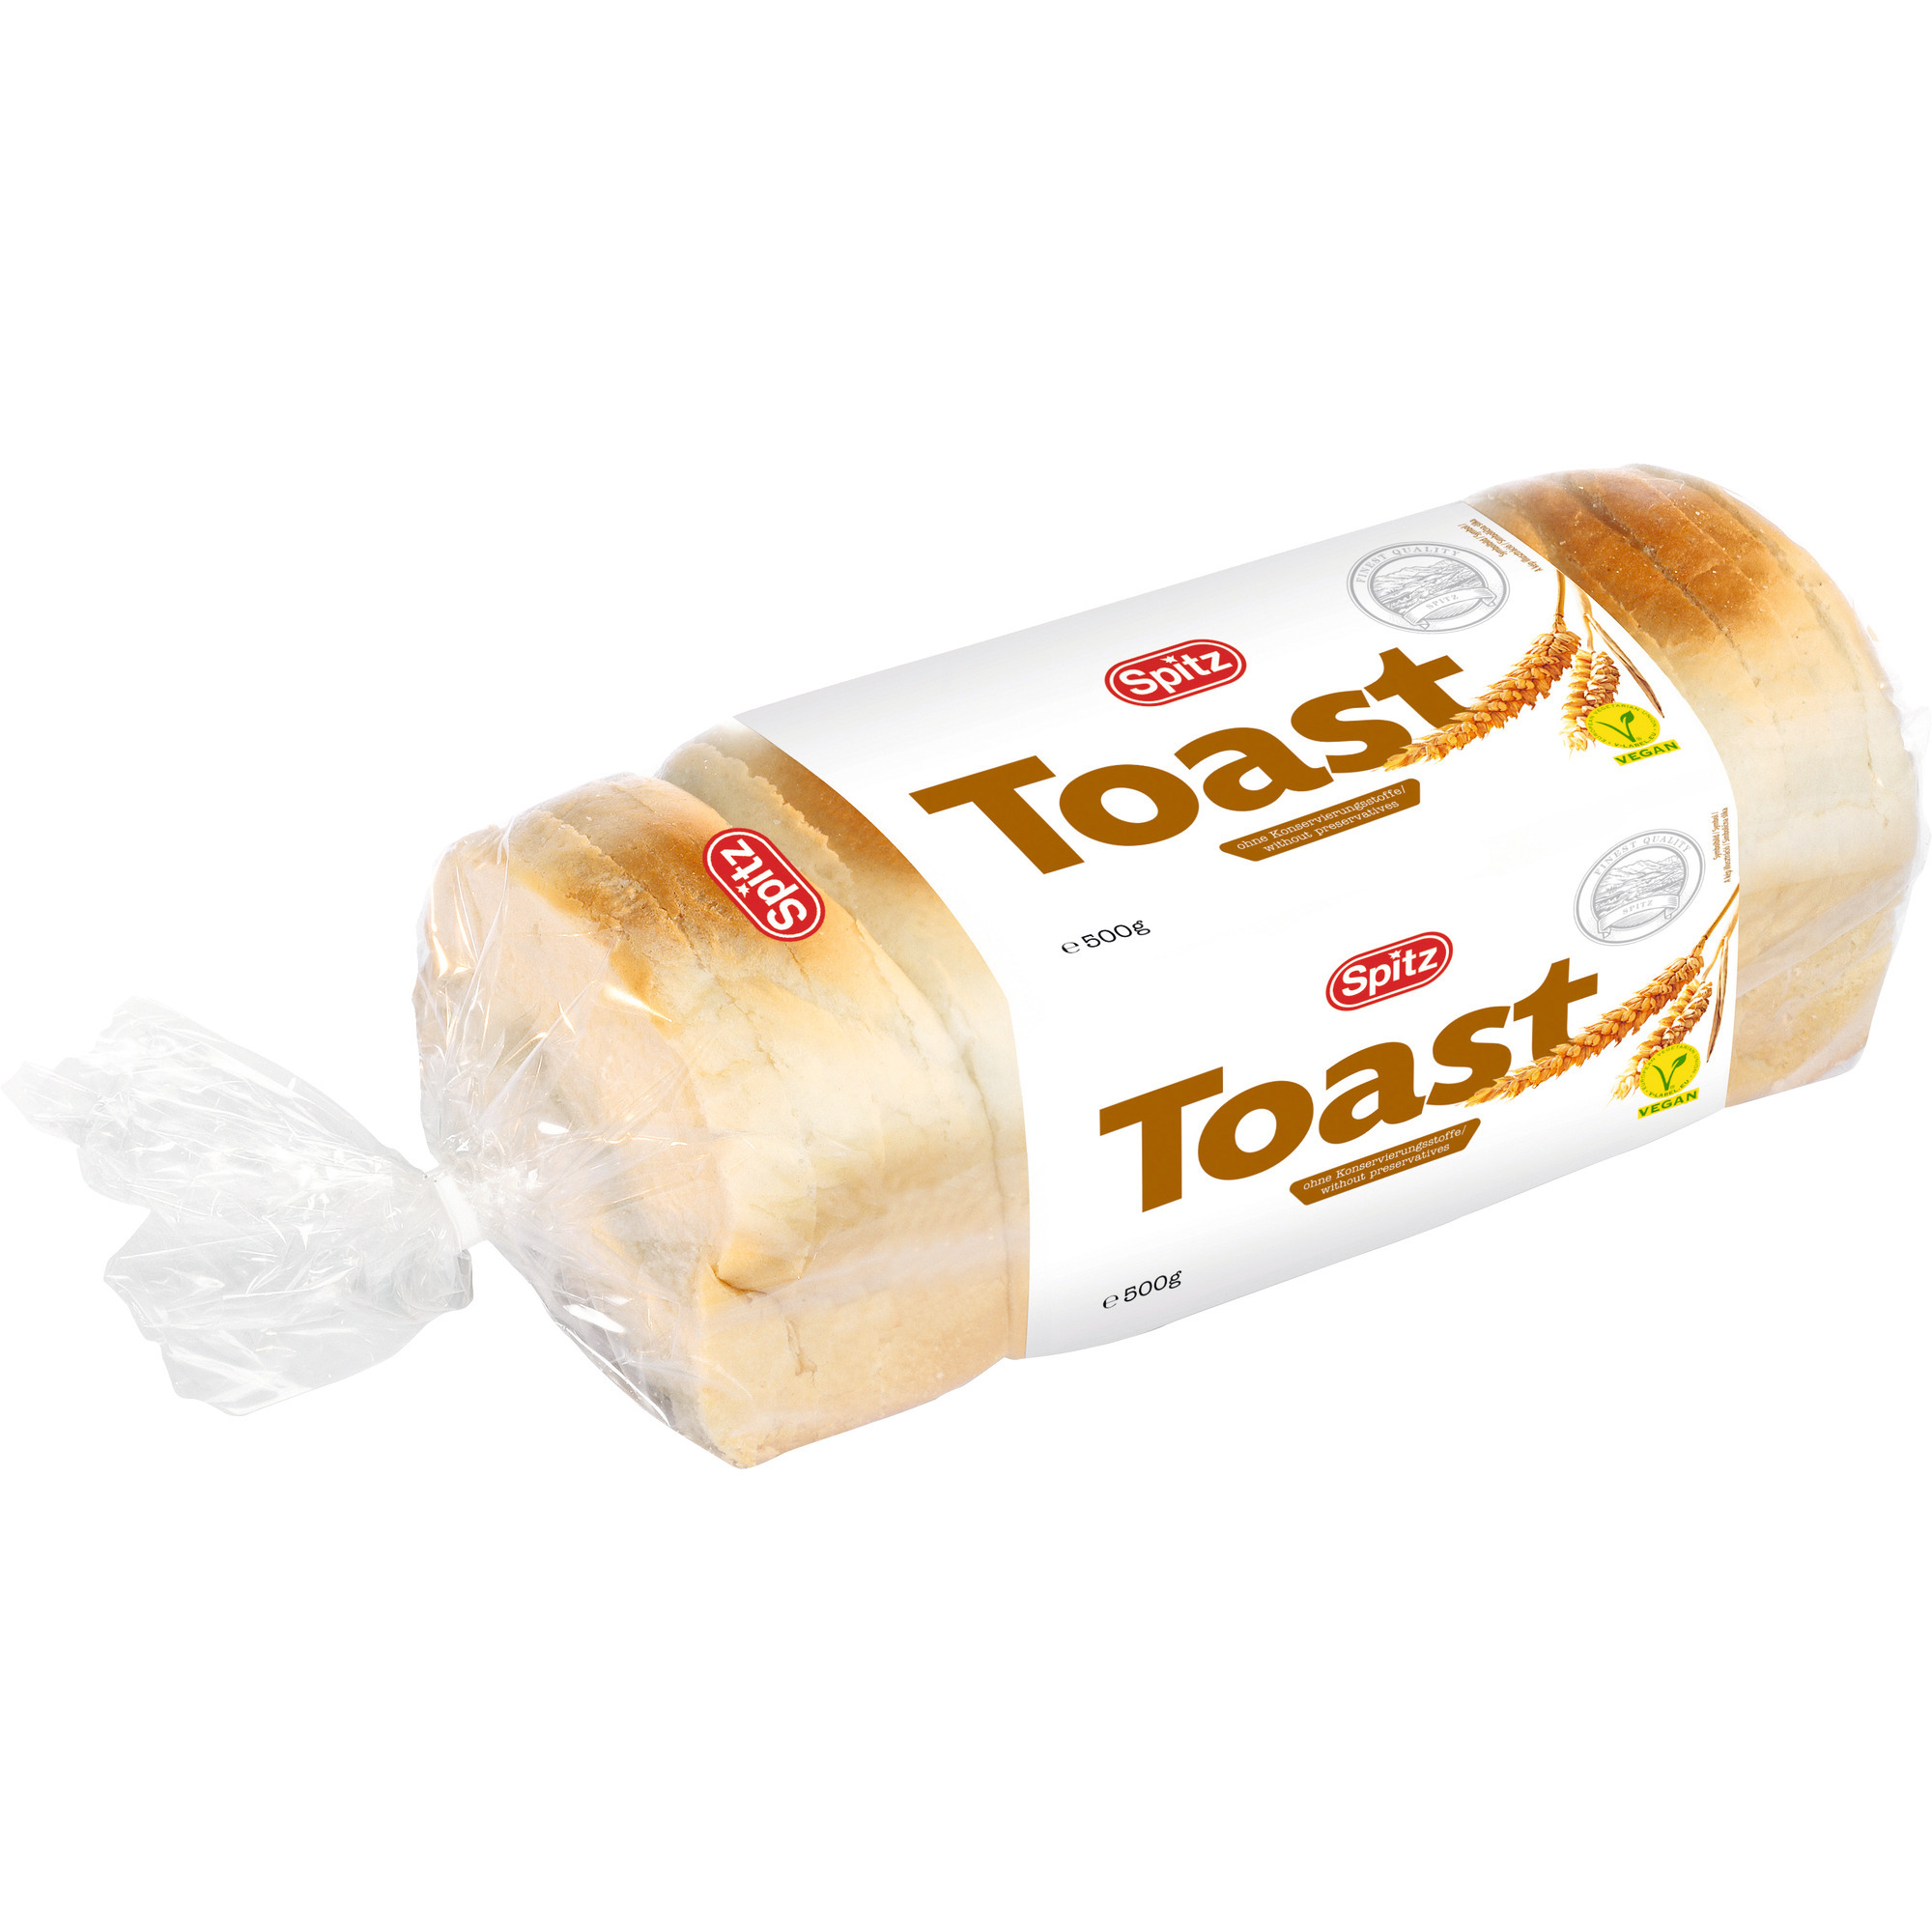 Spitz Toast 500g